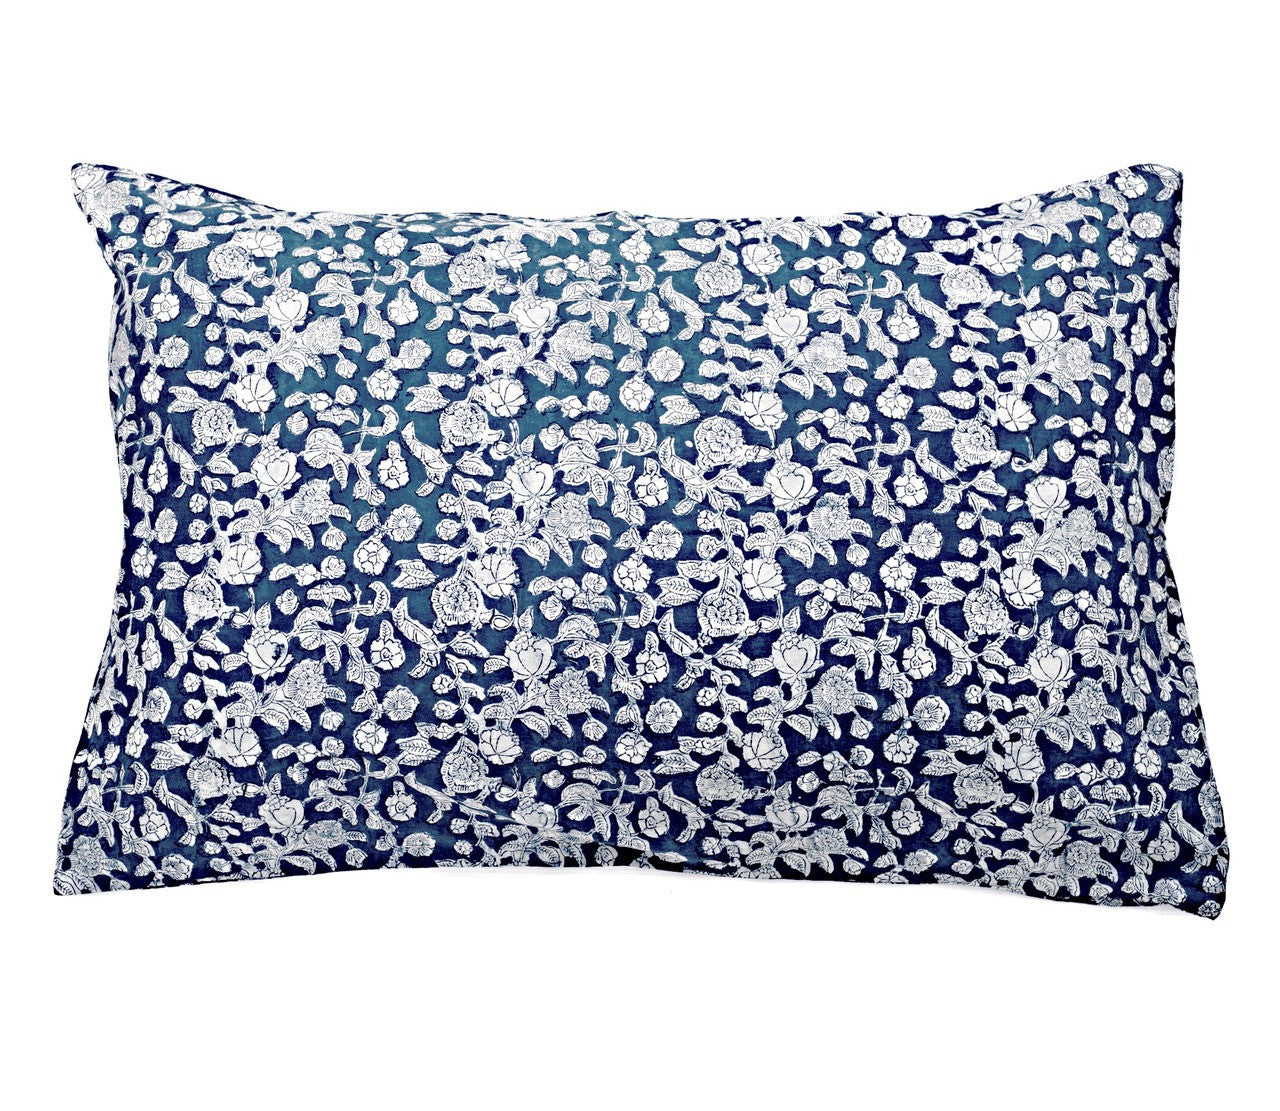 Indigo Hamptons Floral Pillow Cover | Peacocks and Paisleys